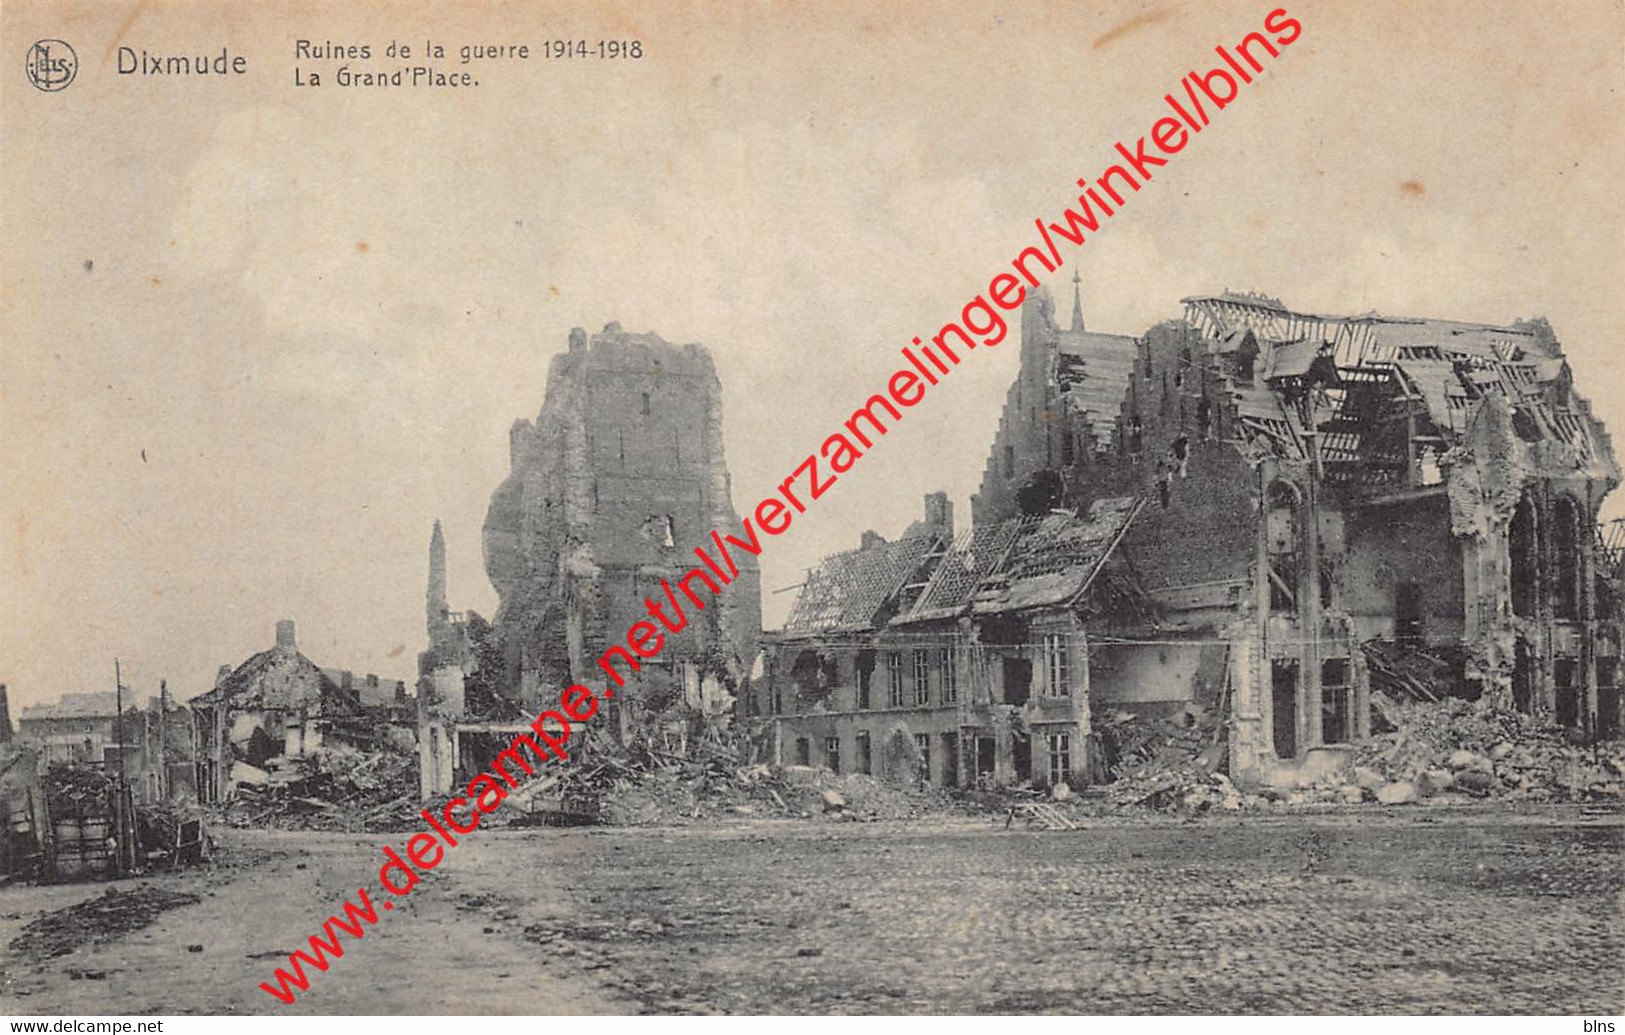 Dixmude - Ruins Of The War 1914-1918 - La Grand'Place - Ruines De La Guerre - Ruines Van De Oorlog - Diksmuide - Diksmuide